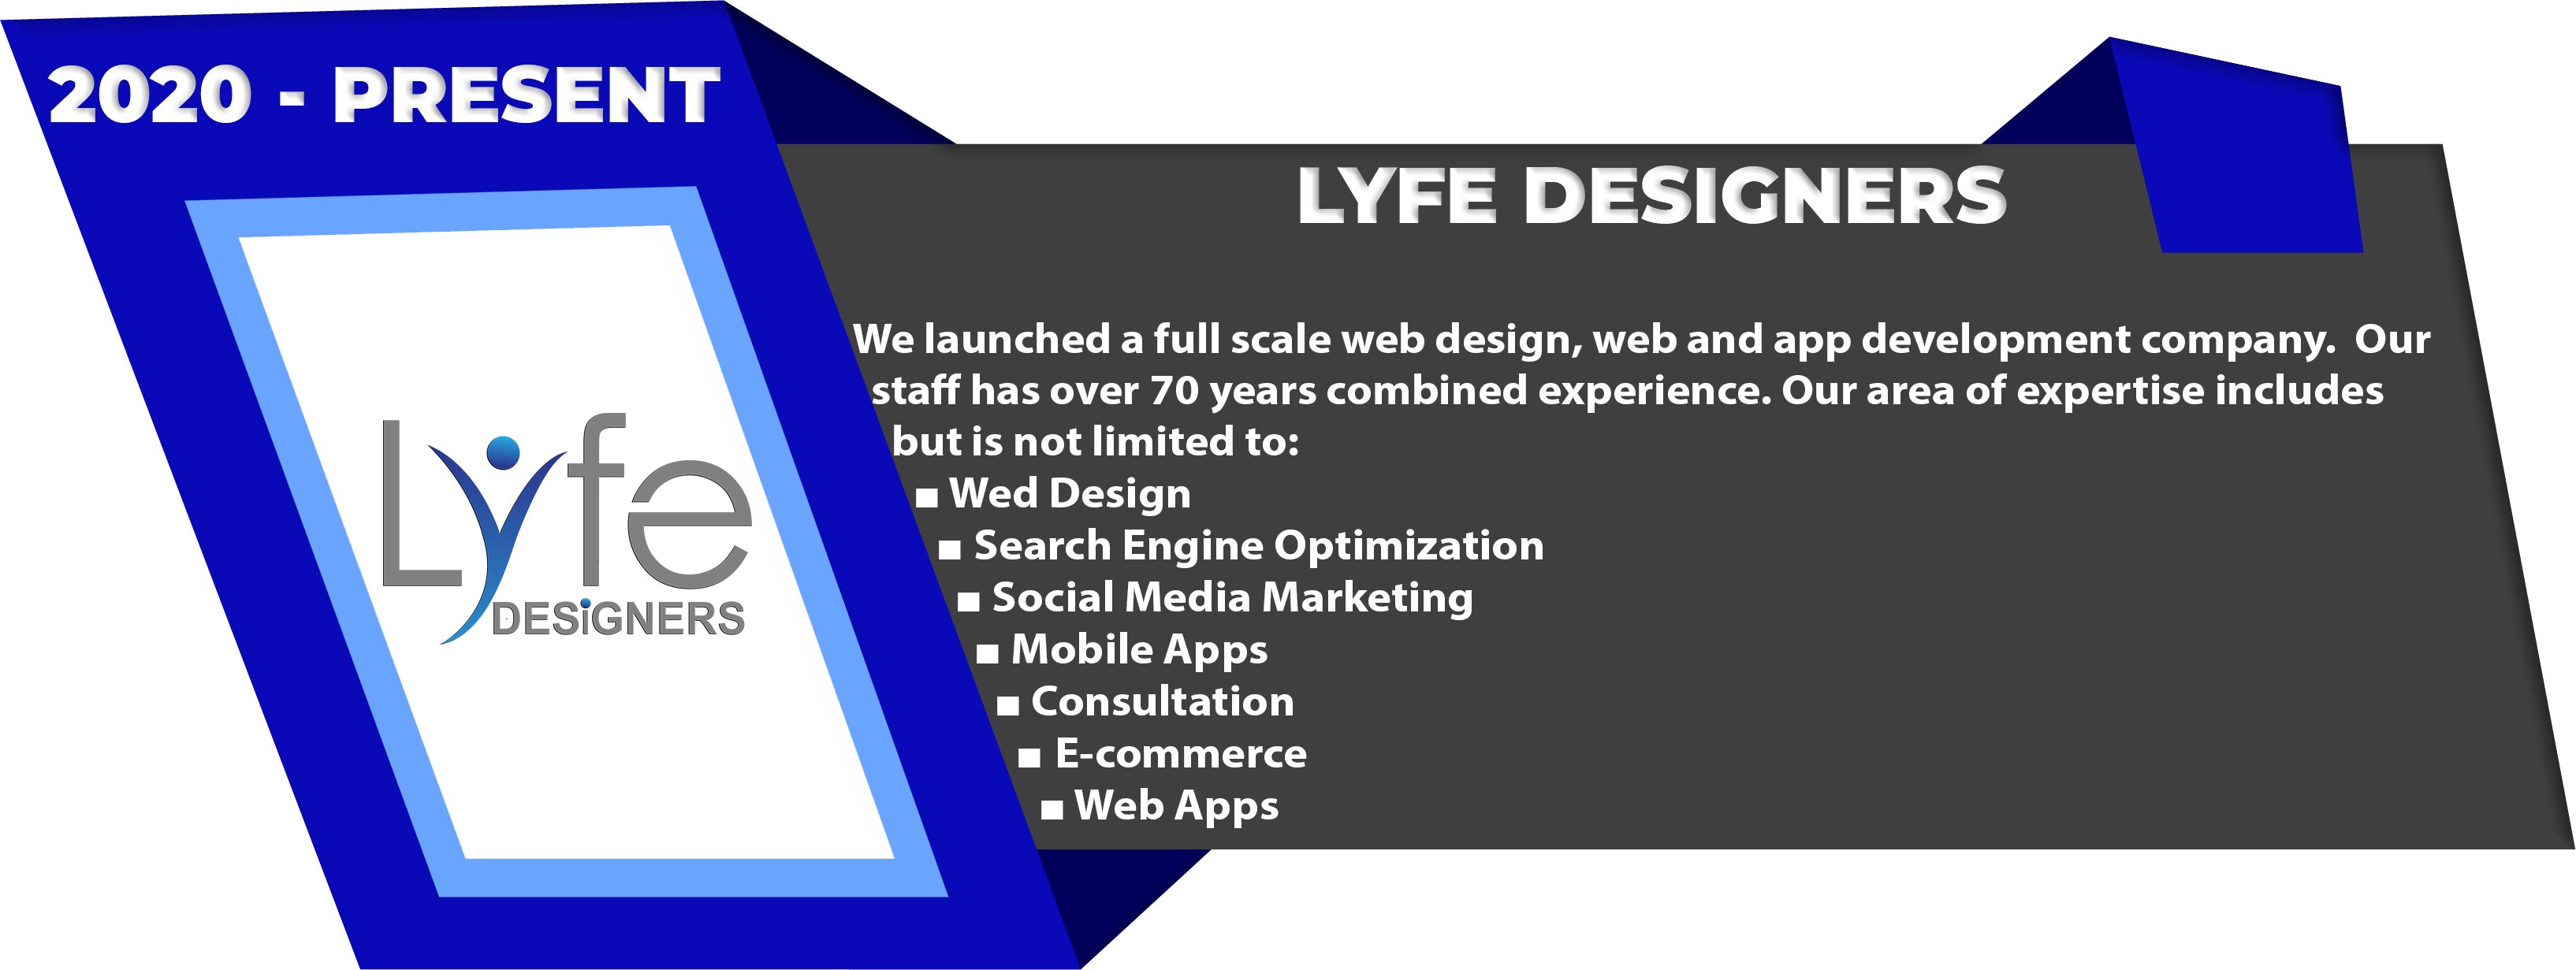 Lyfe Designers 2020